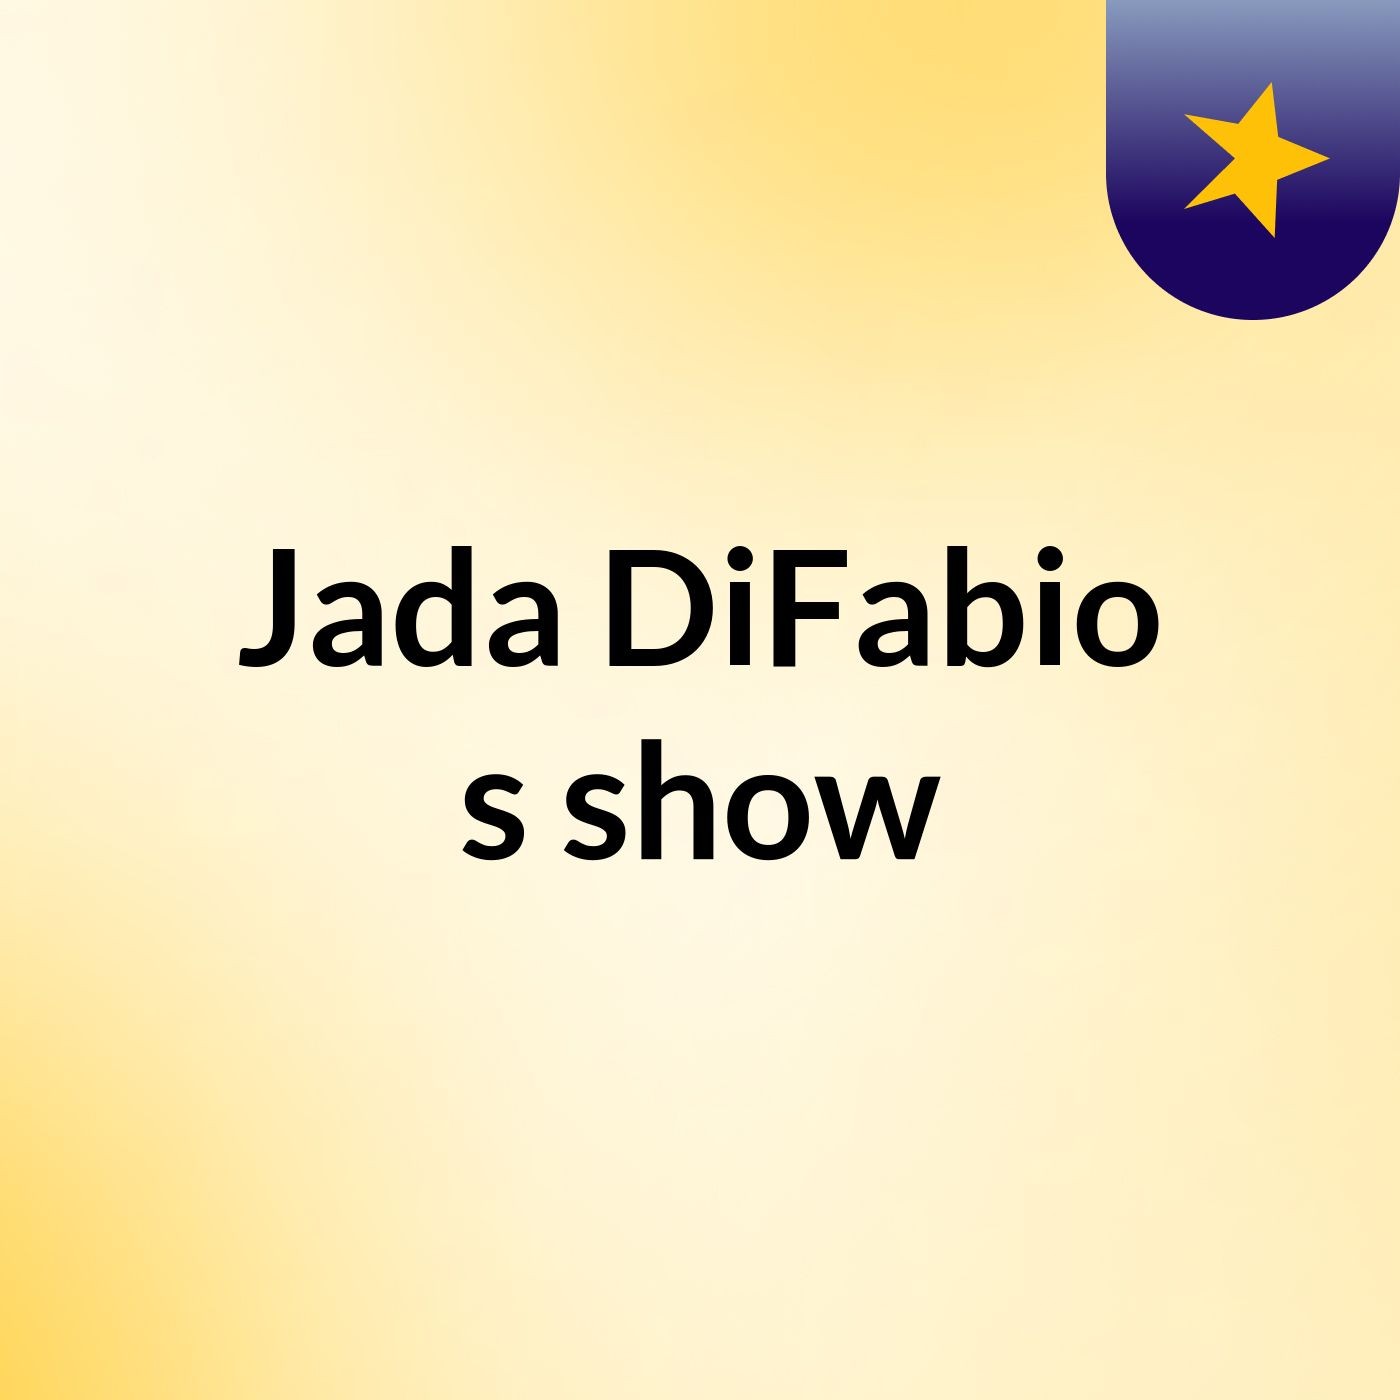 Episode 5 - Jada DiFabio's show